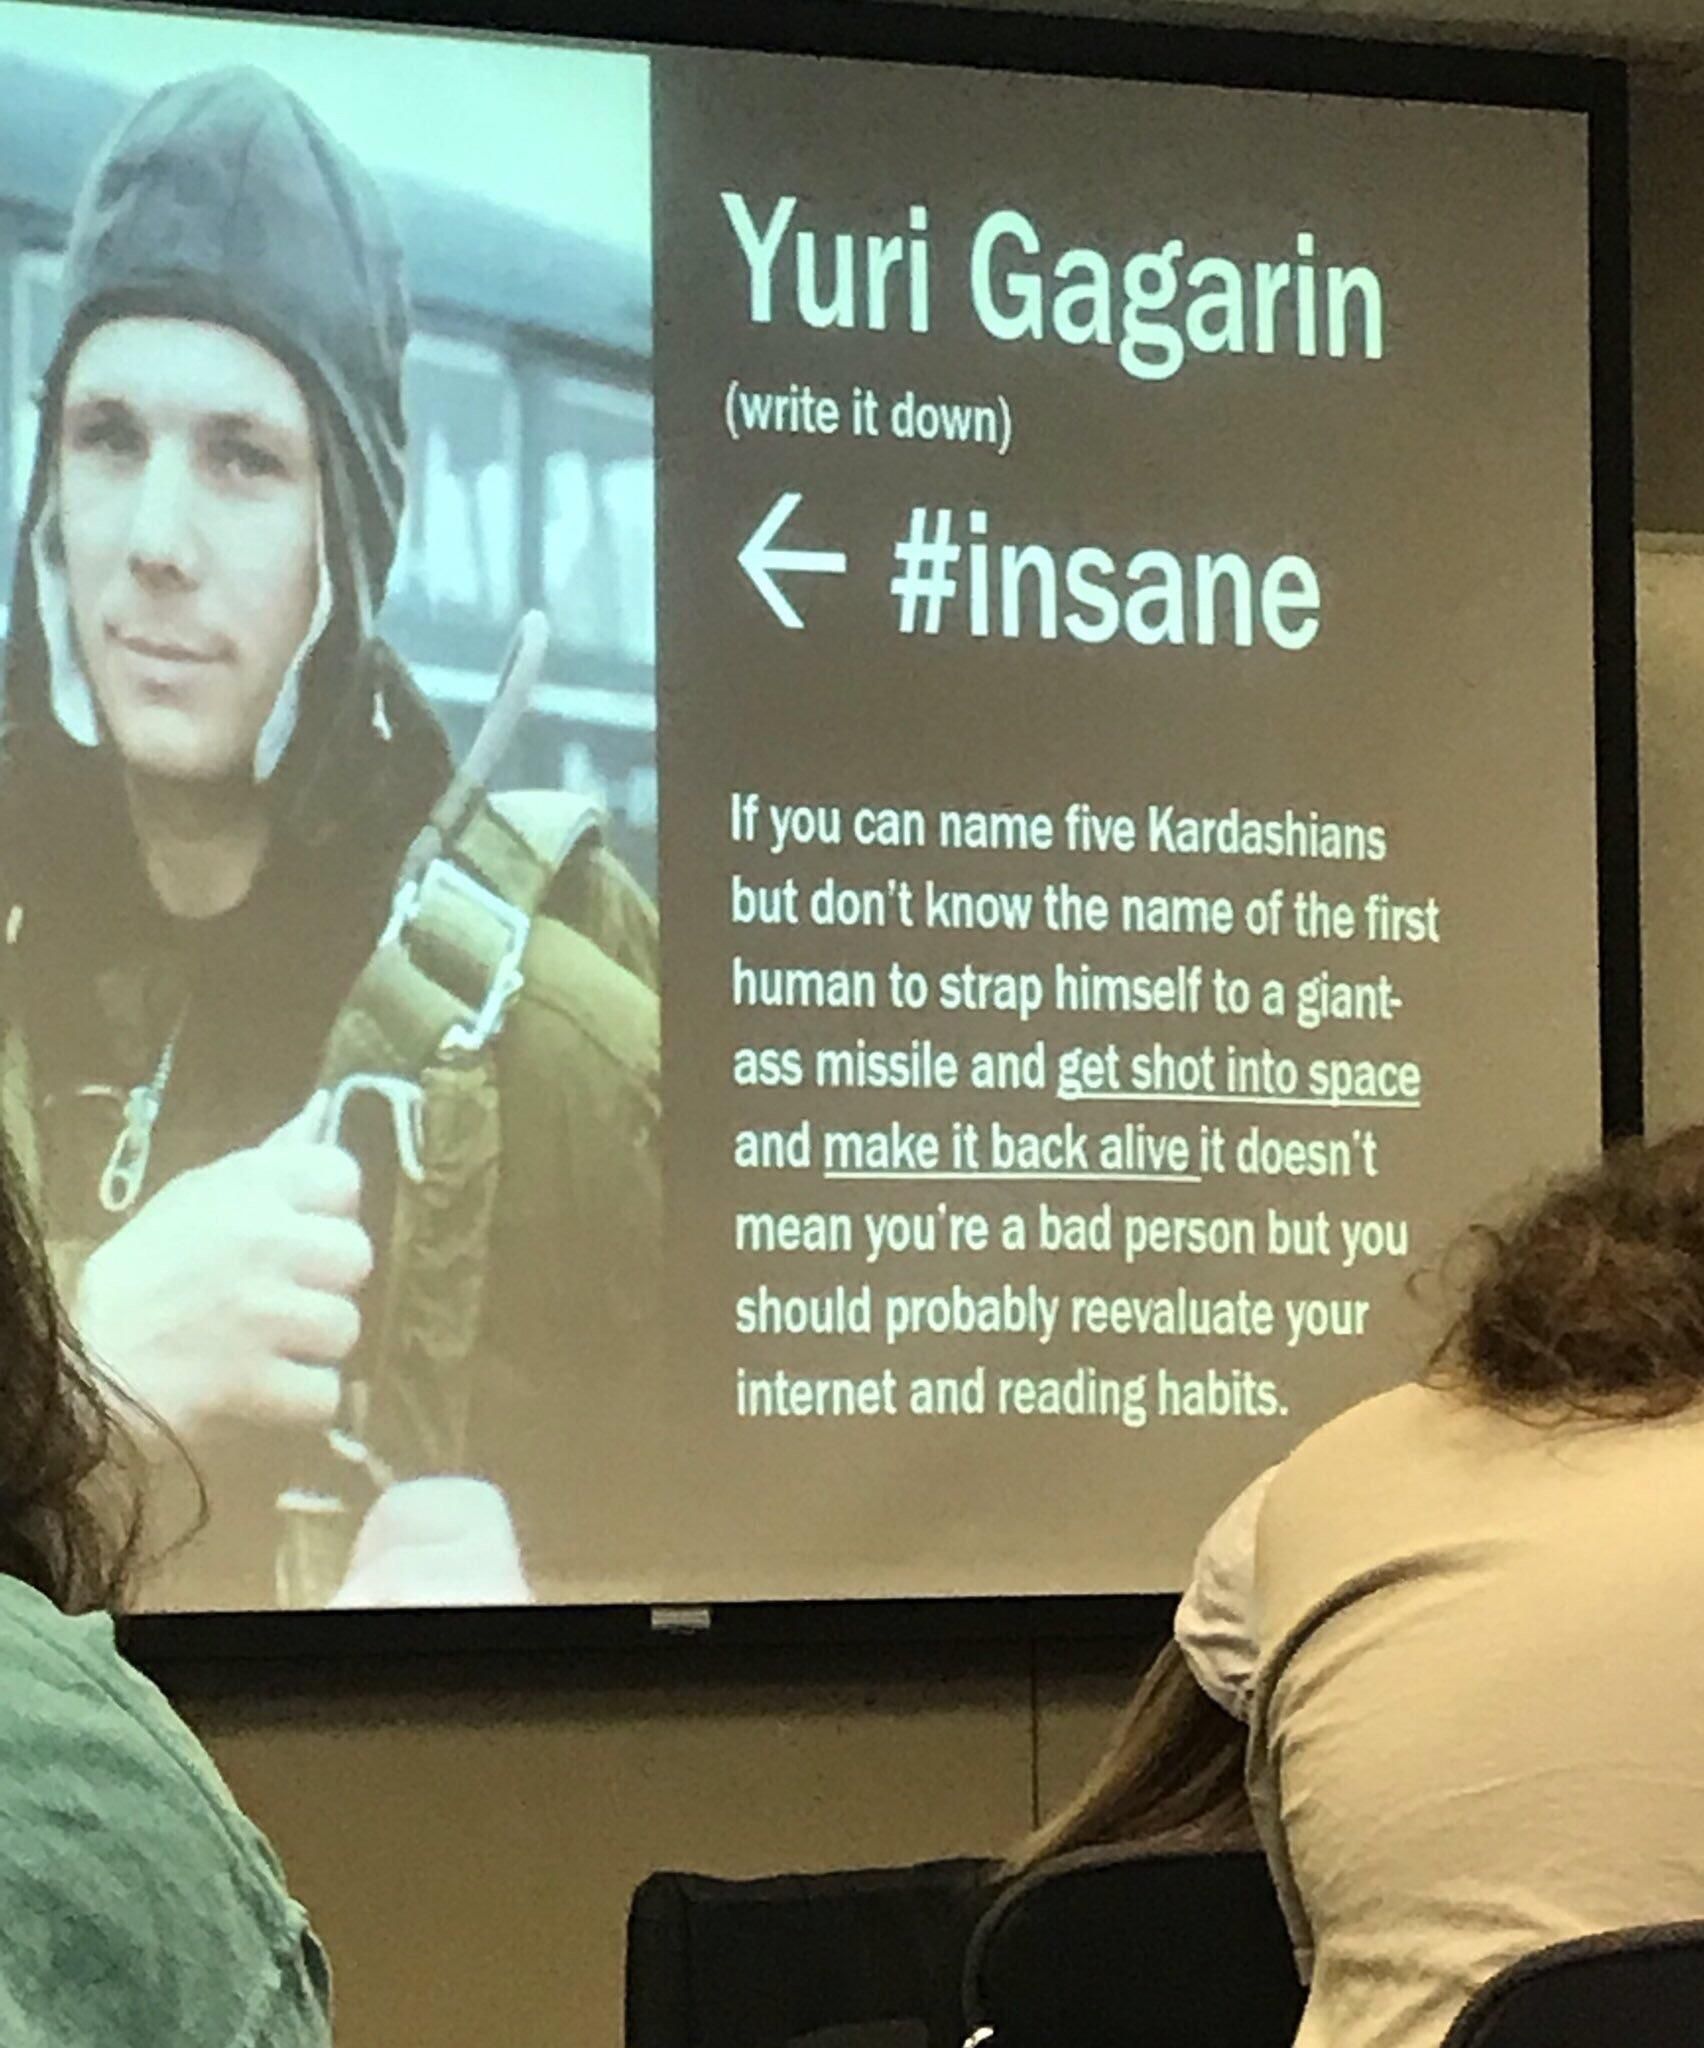 A history teacher’s slide on an astronaut